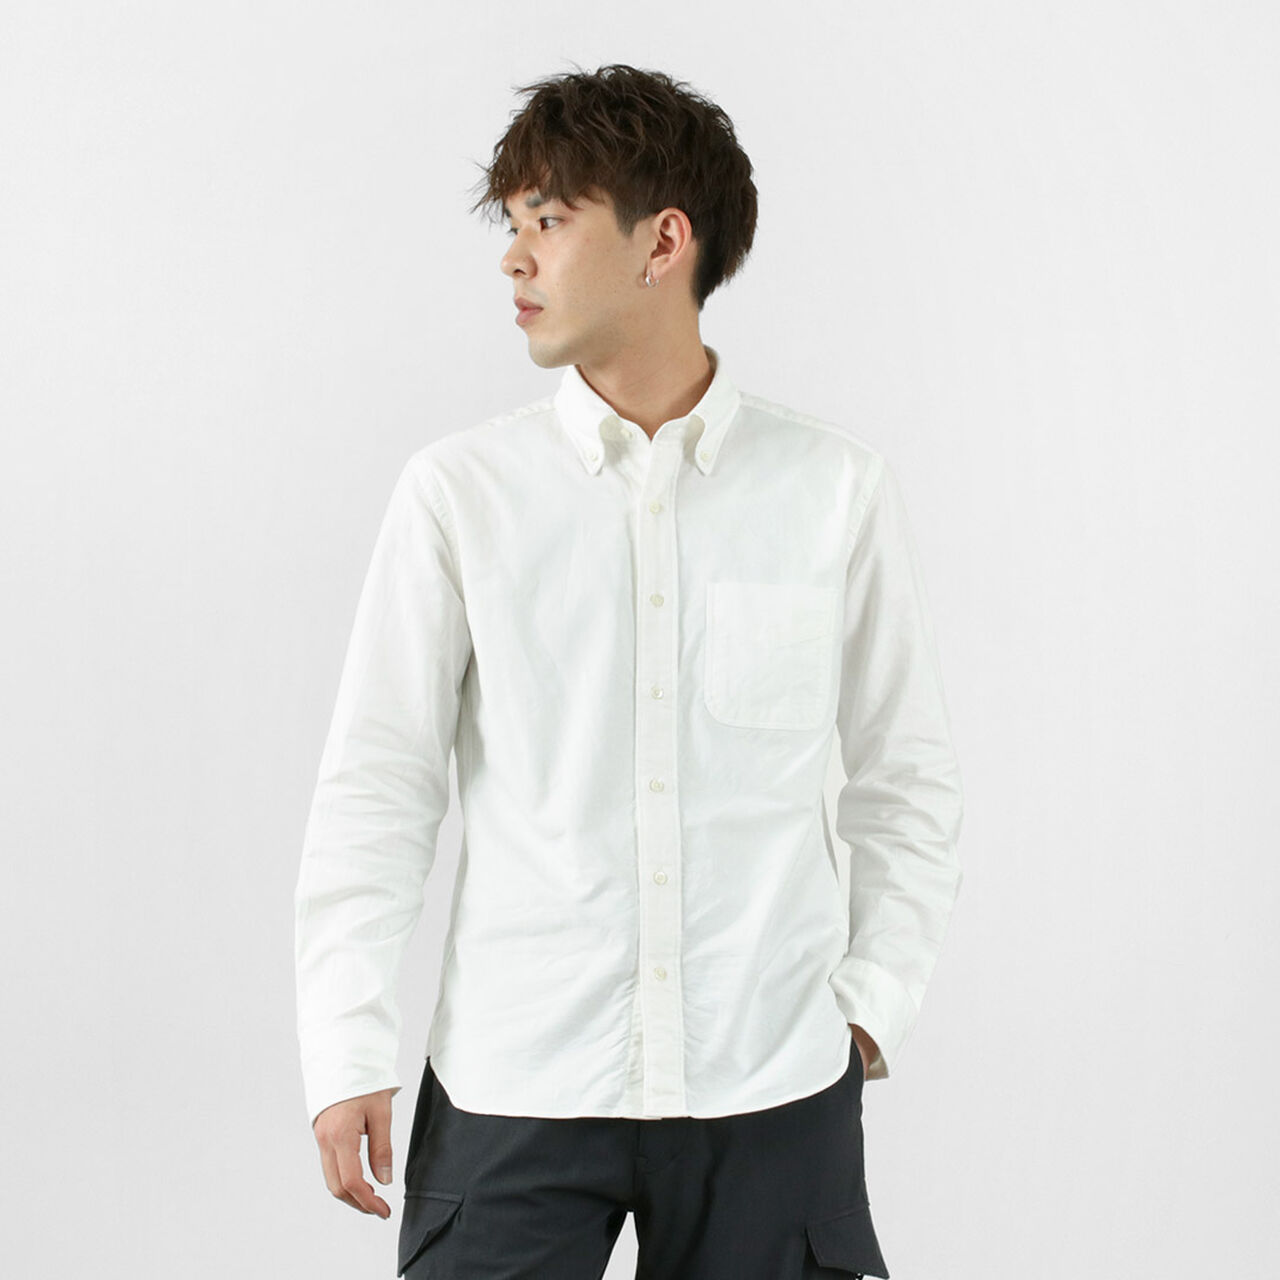 Oxford B.D shirt,White, large image number 0